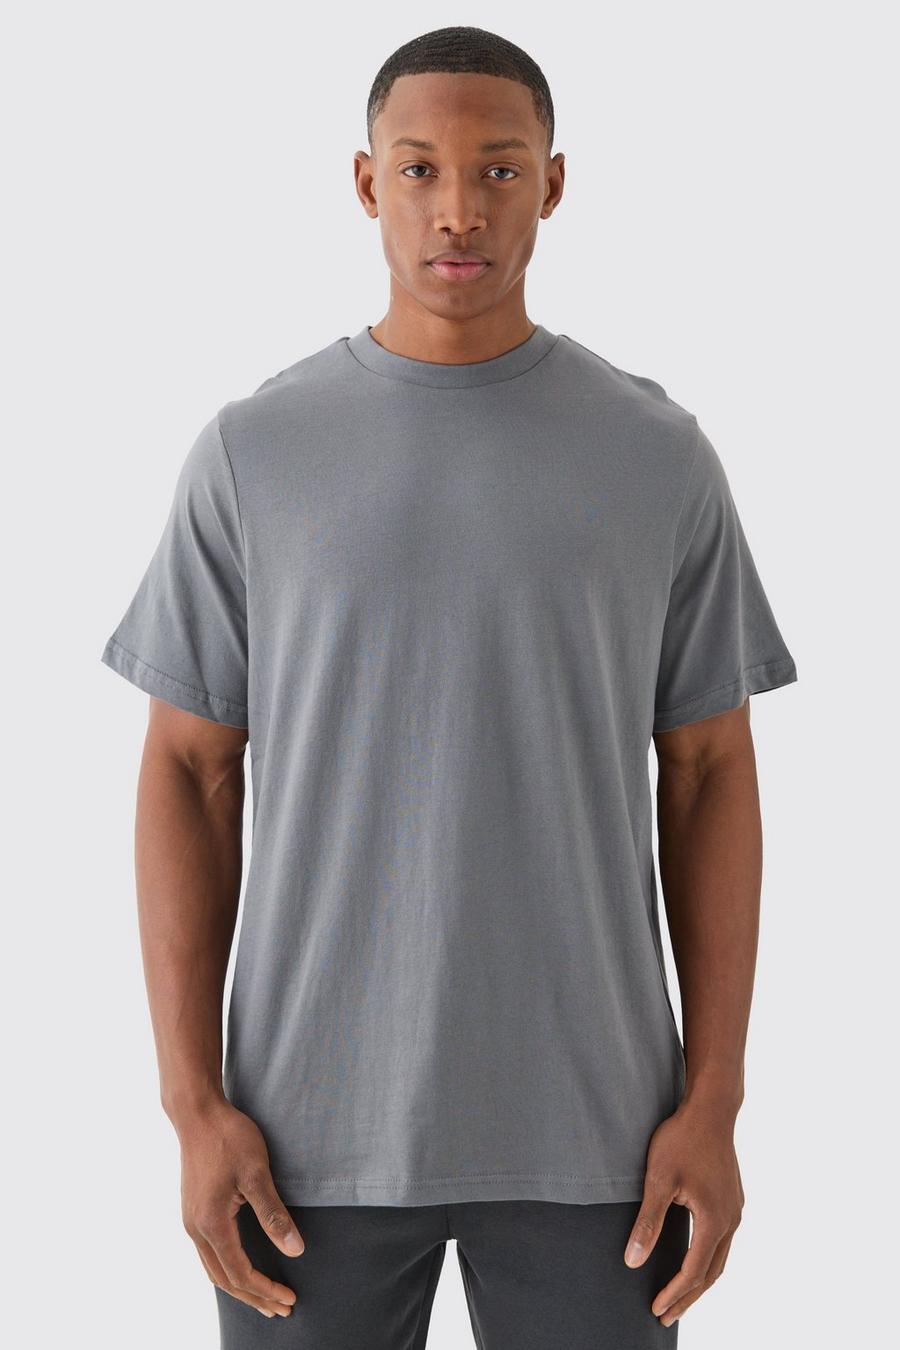 Charcoal grey Basic Crew Neck T-shirt